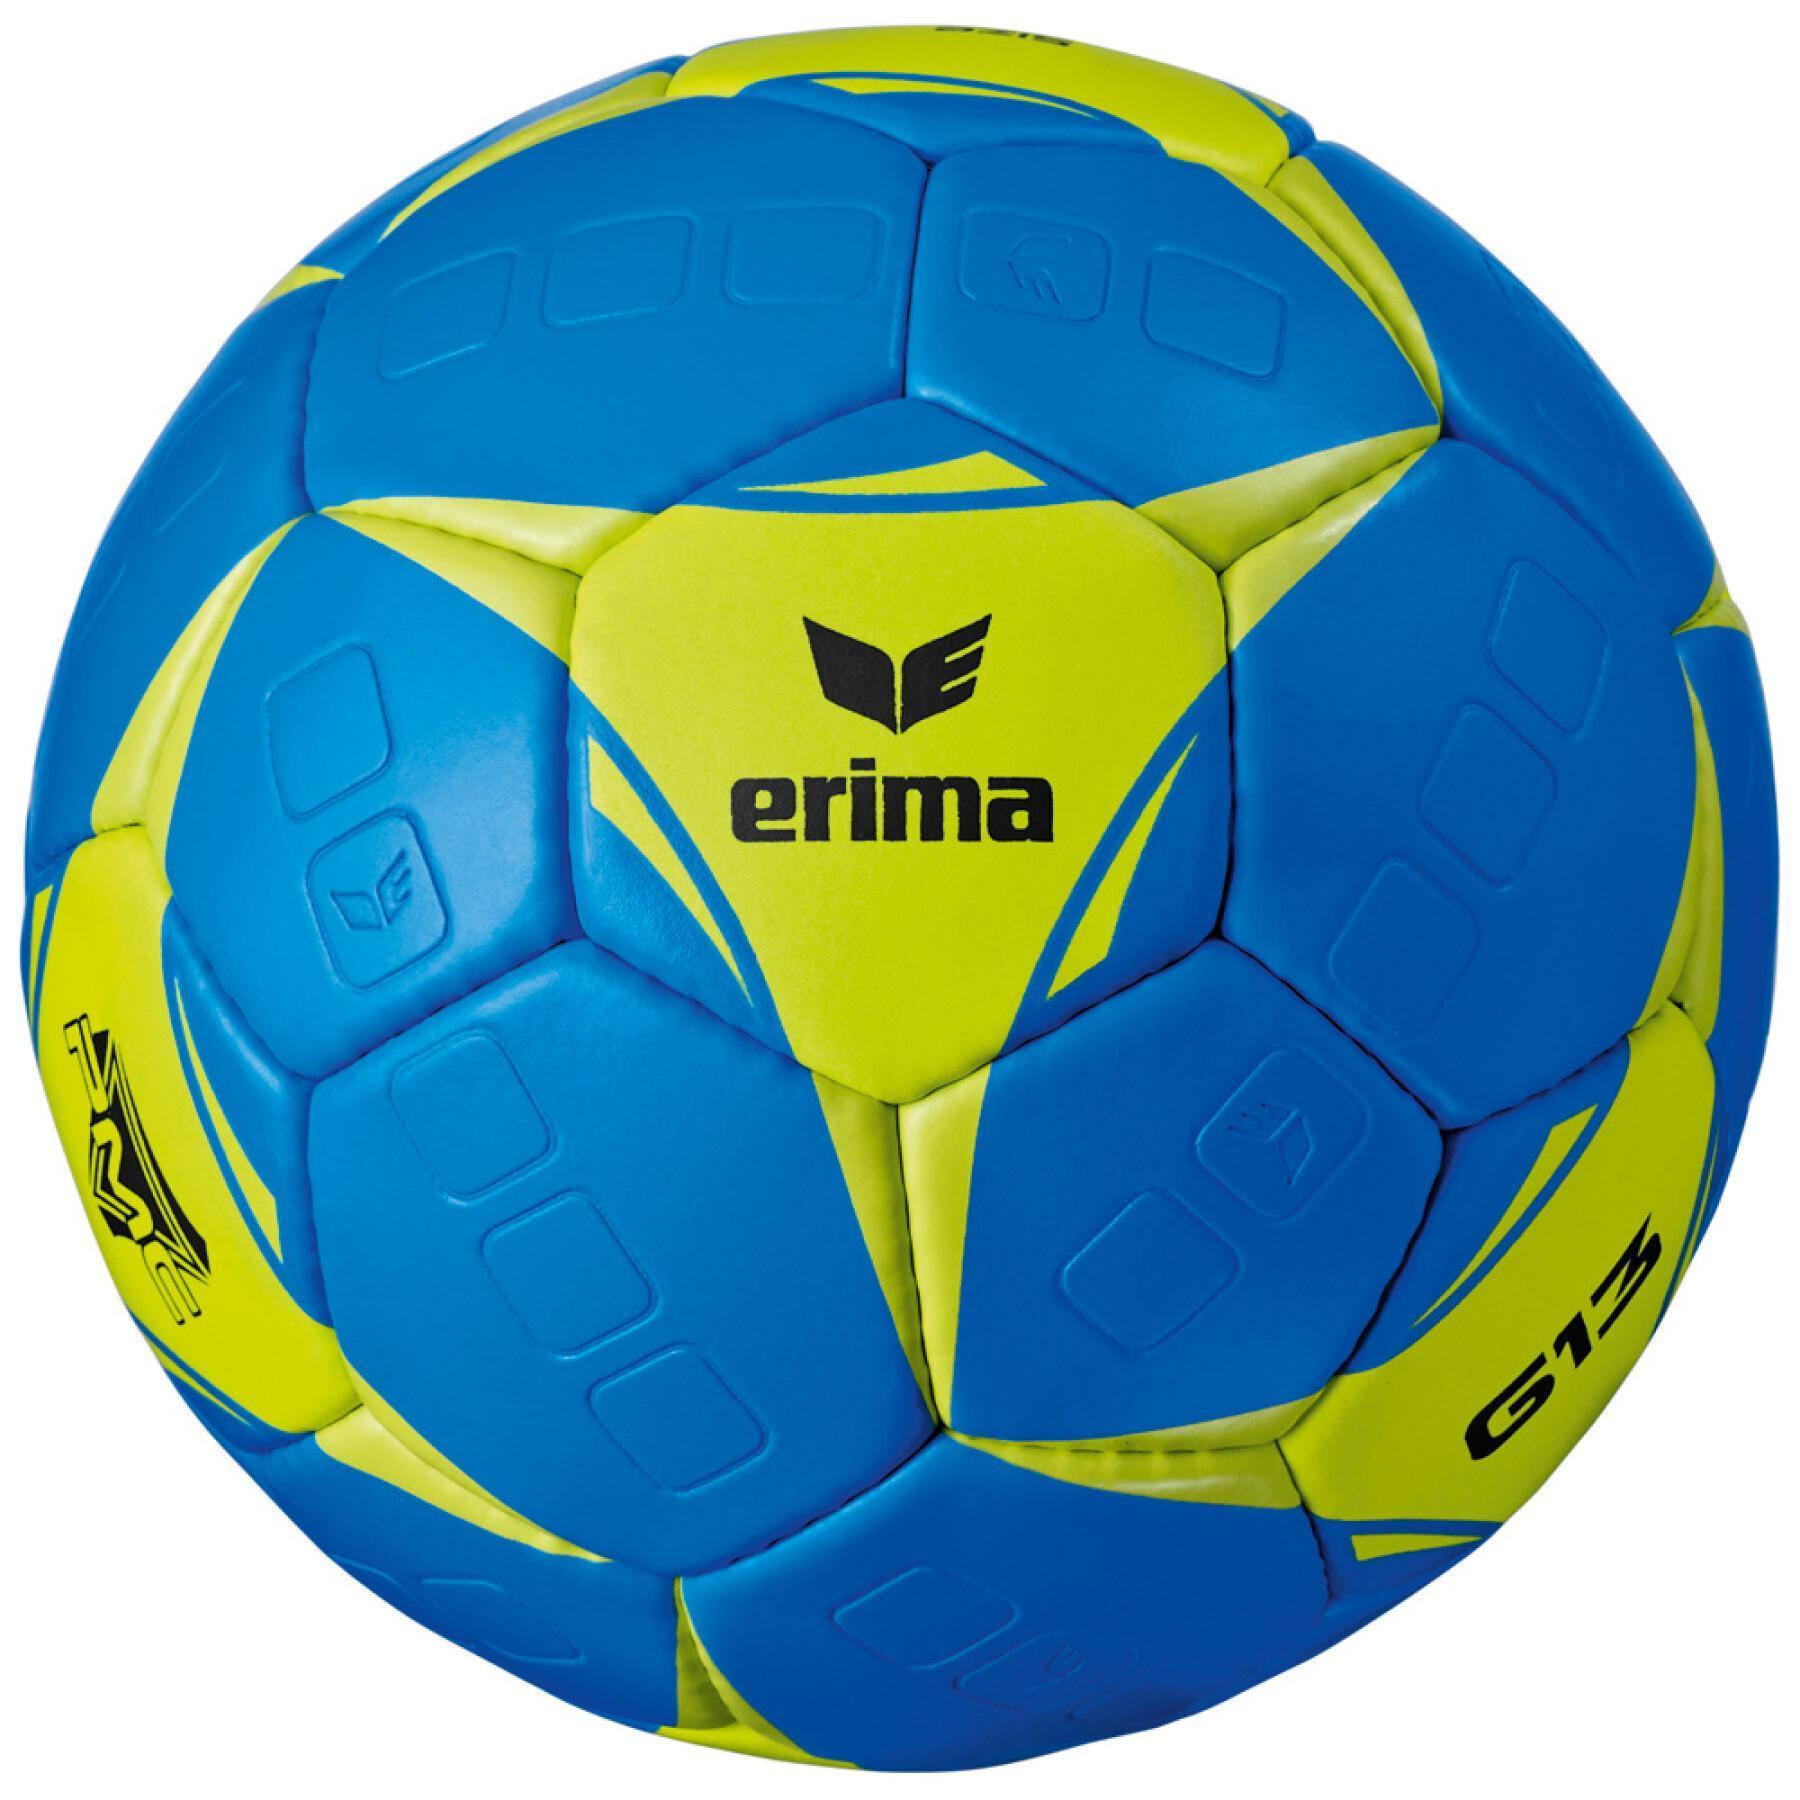 Handball Erima G13